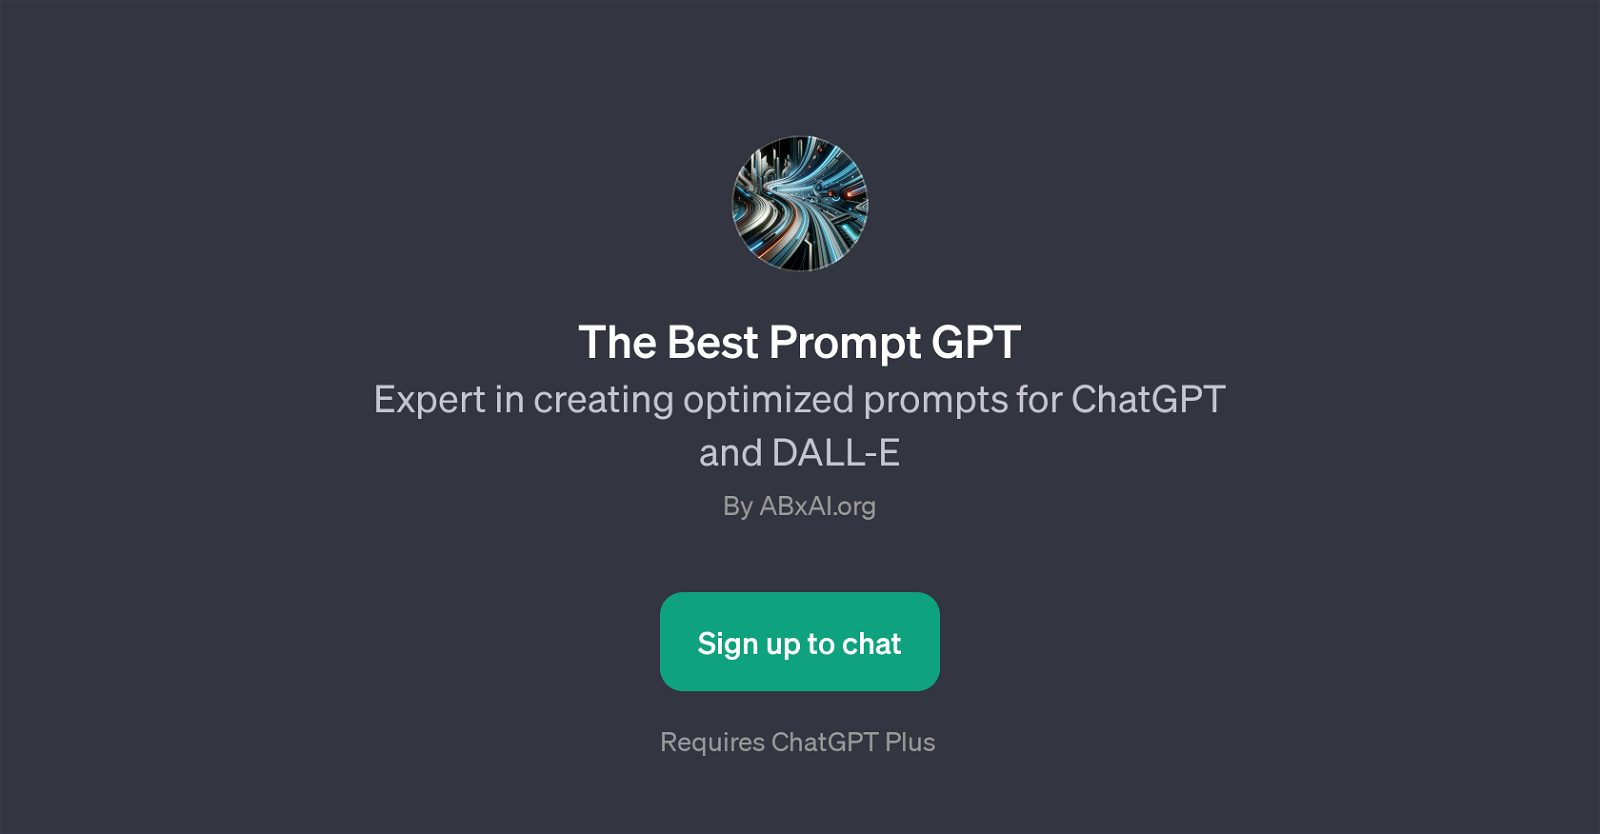 The Best Prompt GPT website